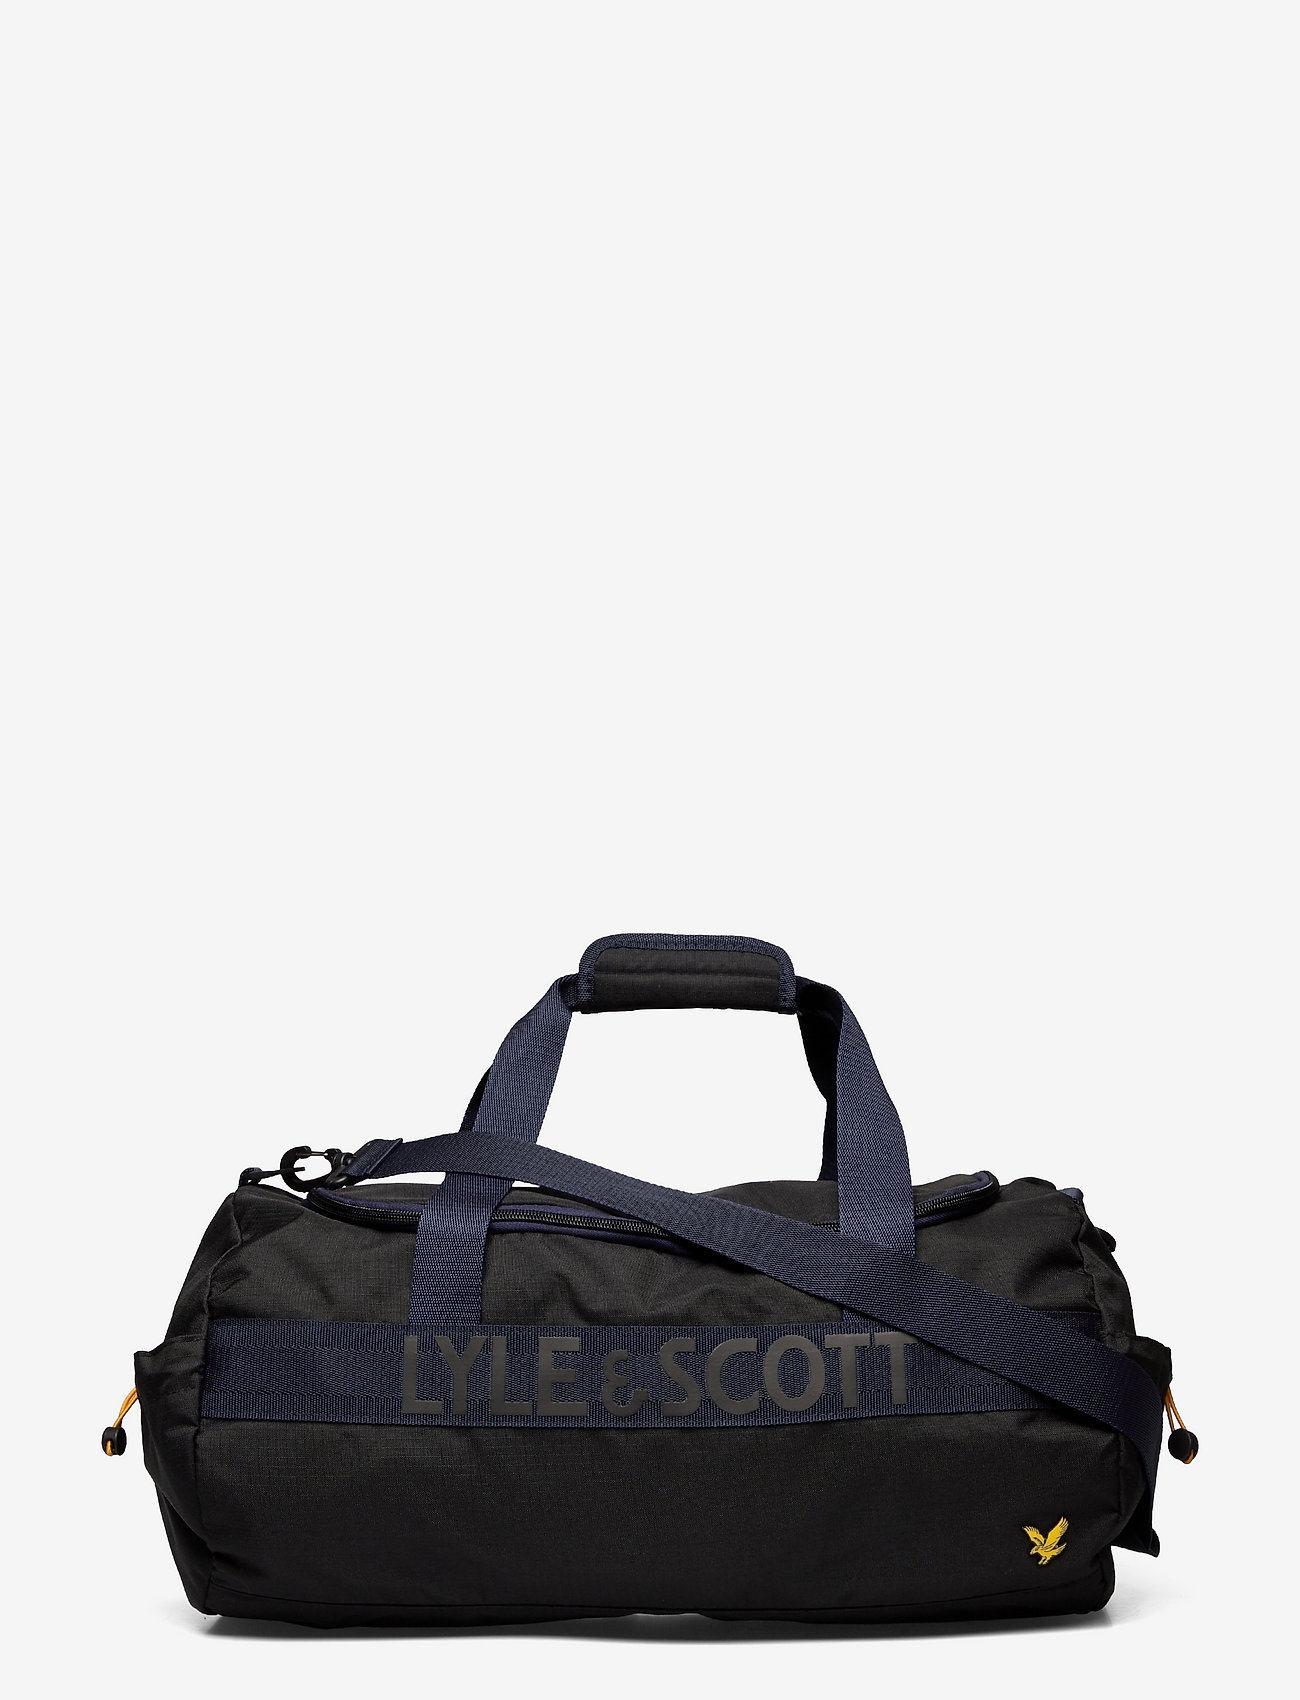 Lyle & Scott - Recycled Ripstop Duffel Bag - true black - 0